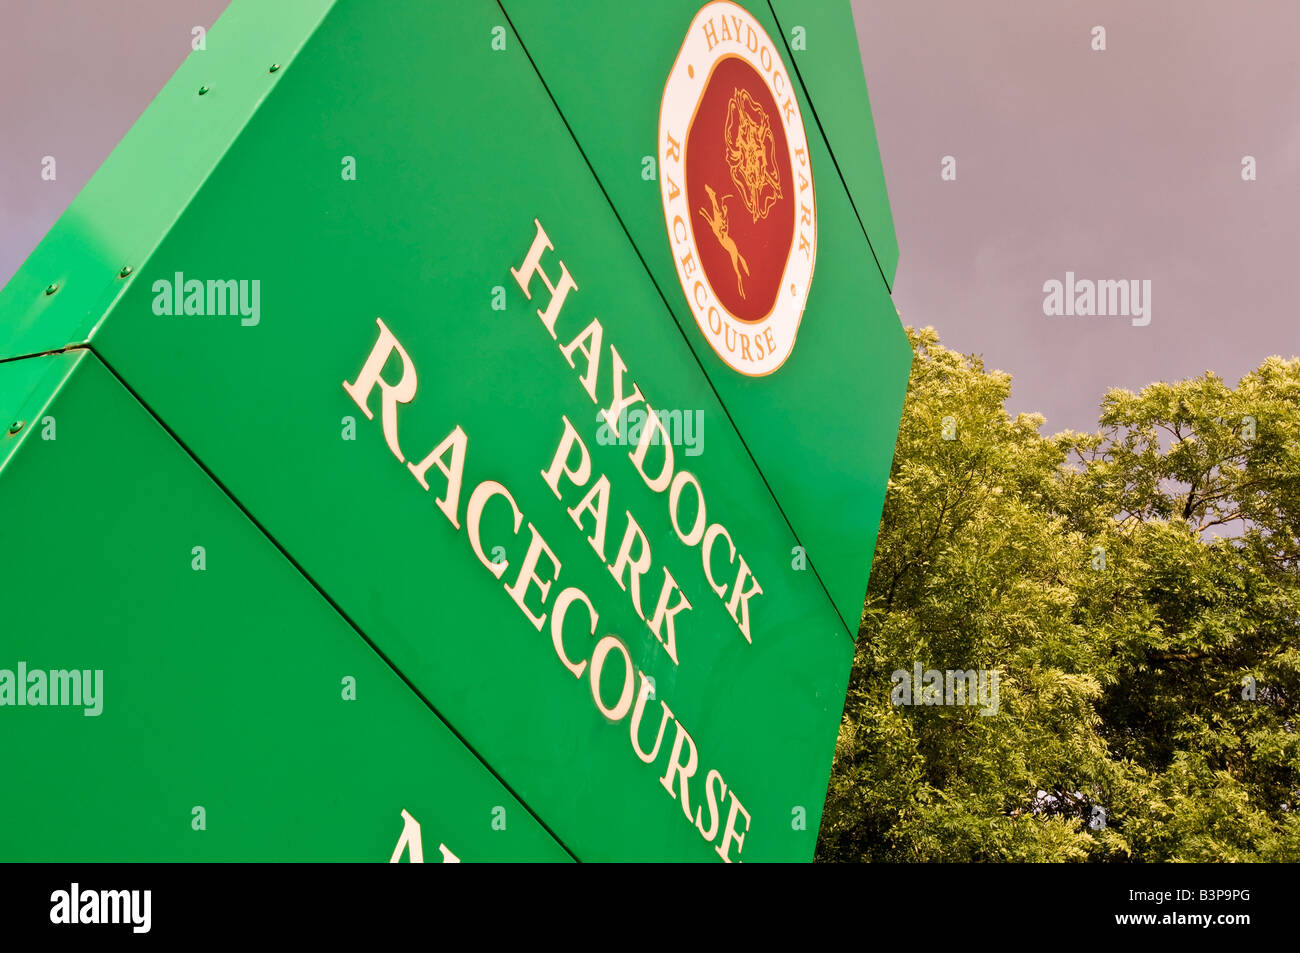 entrance sign Haydock Park Racecourse Newton-le- Willows Stock Photo